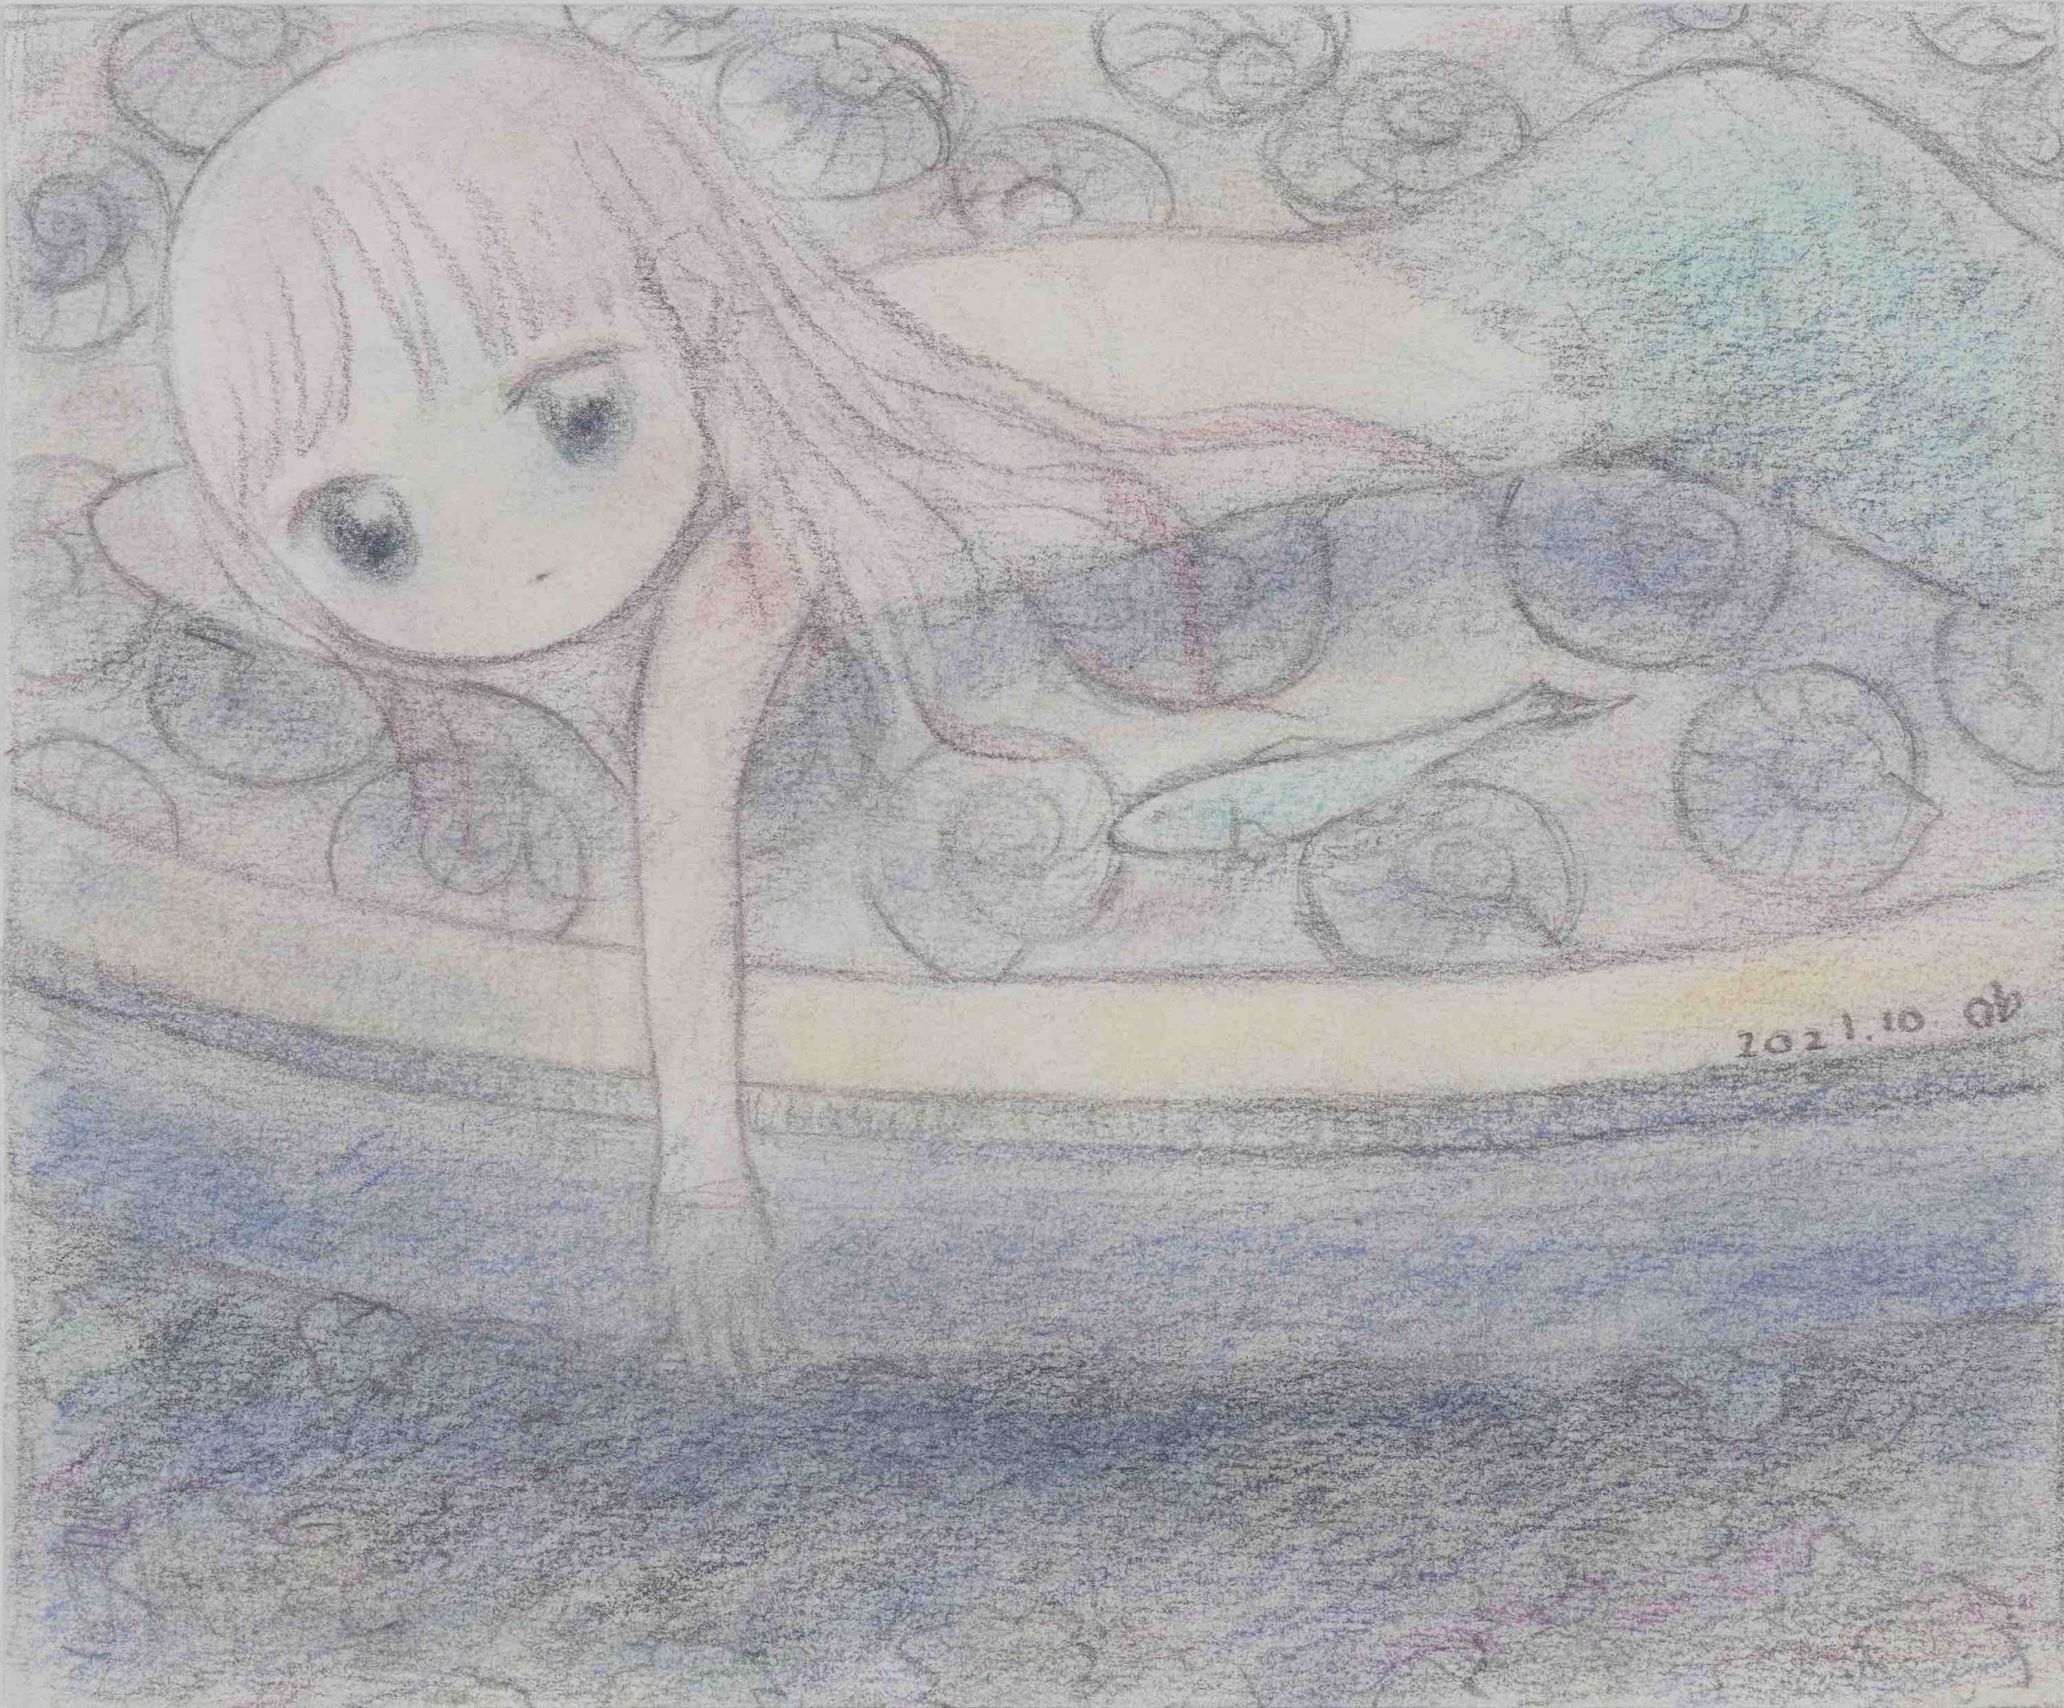 4.A Mermaid in the Pond　128 x 155mm　2021　©2021 ob/Kaikai Kiki Co., Ltd. All Rights Reserved.